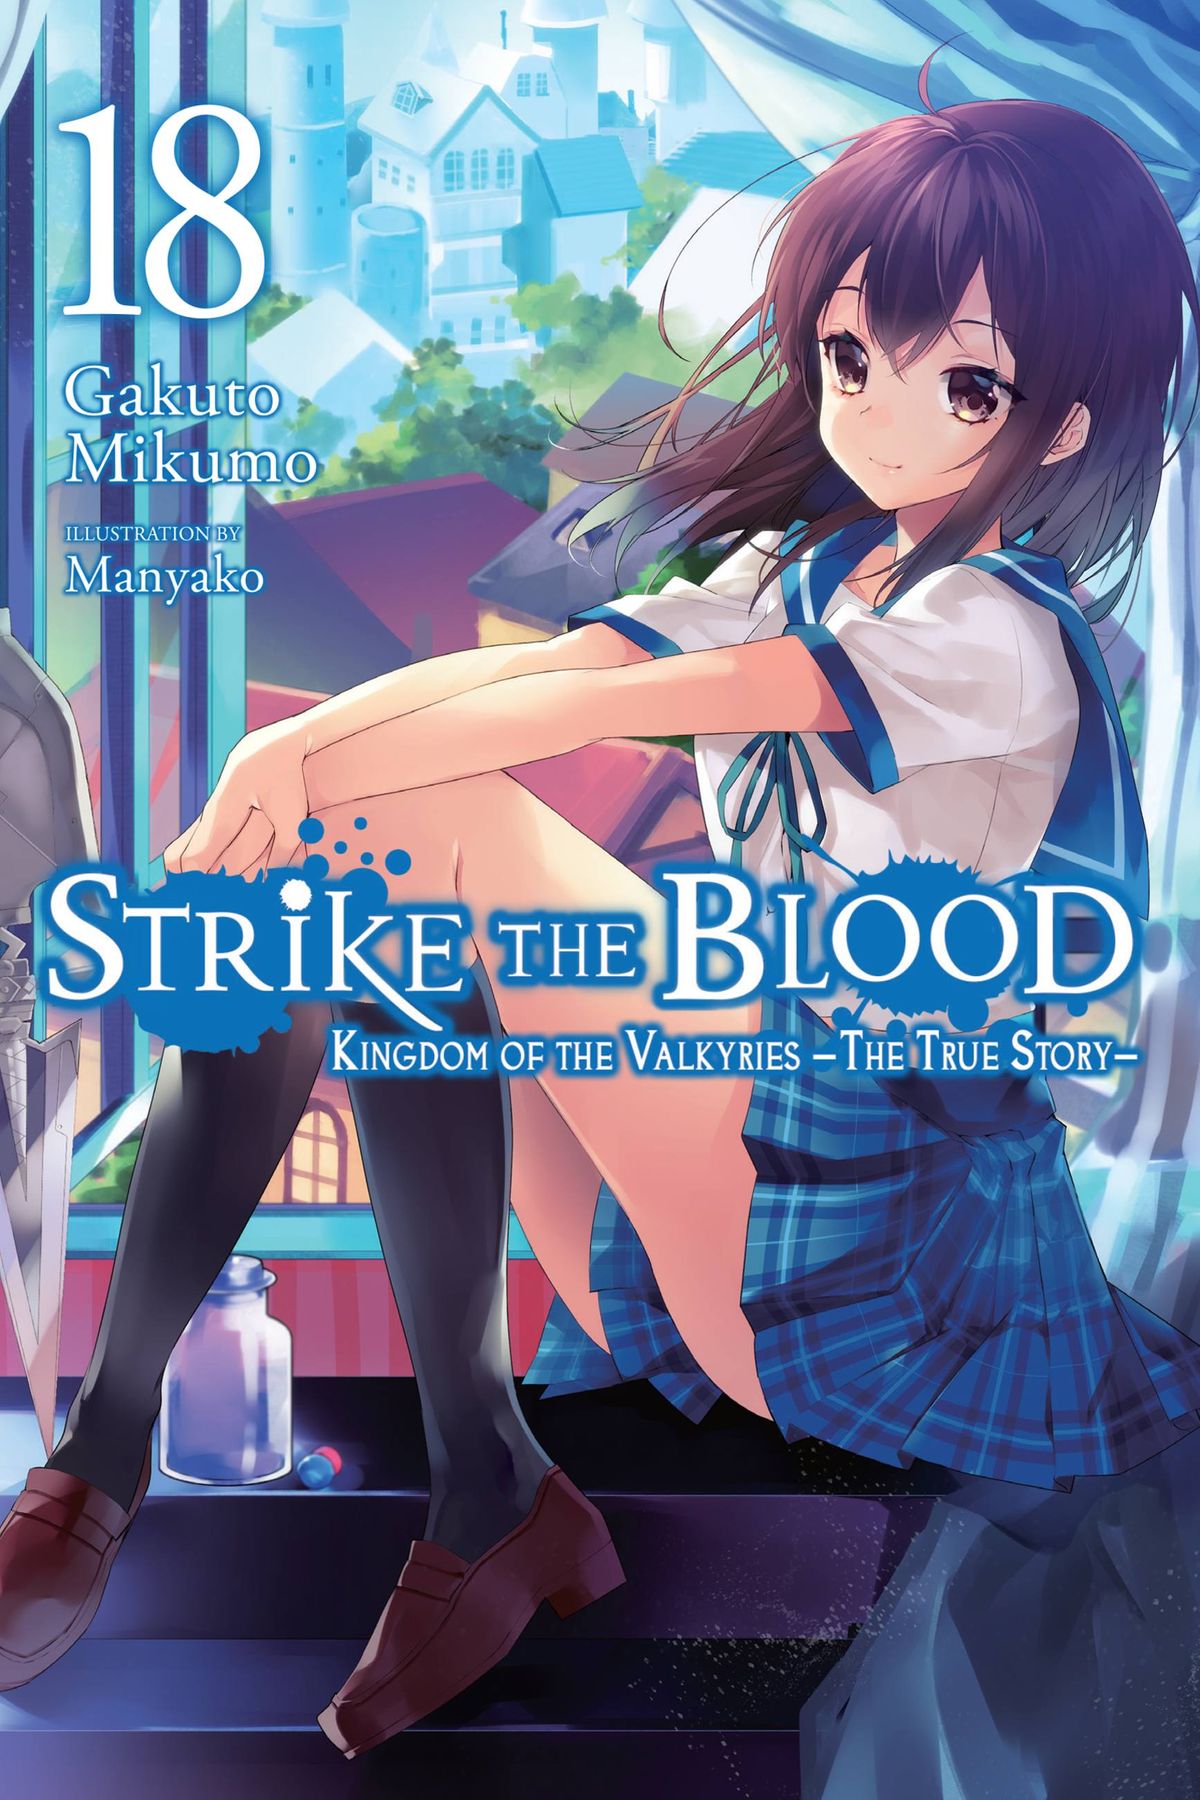 Anime Corner - NEWS: Strike the Blood 𝐥𝐢𝐠𝐡𝐭 𝐧𝐨𝐯𝐞𝐥 series